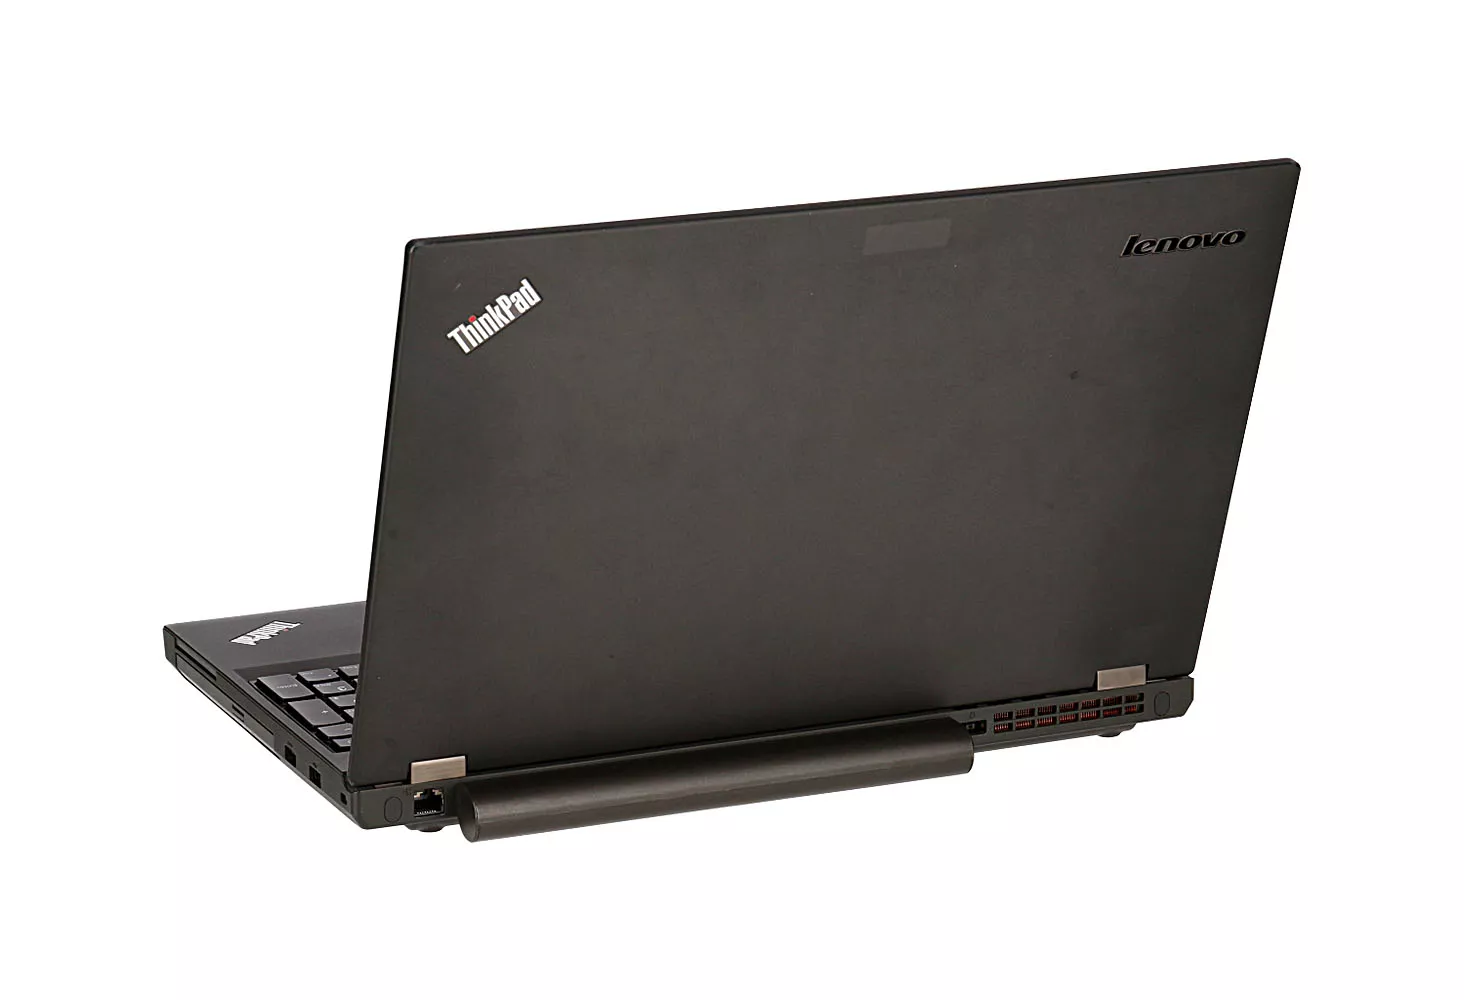 Lenovo ThinkPad W540 Core i7 4800MQ 2,7 GHz Webcam